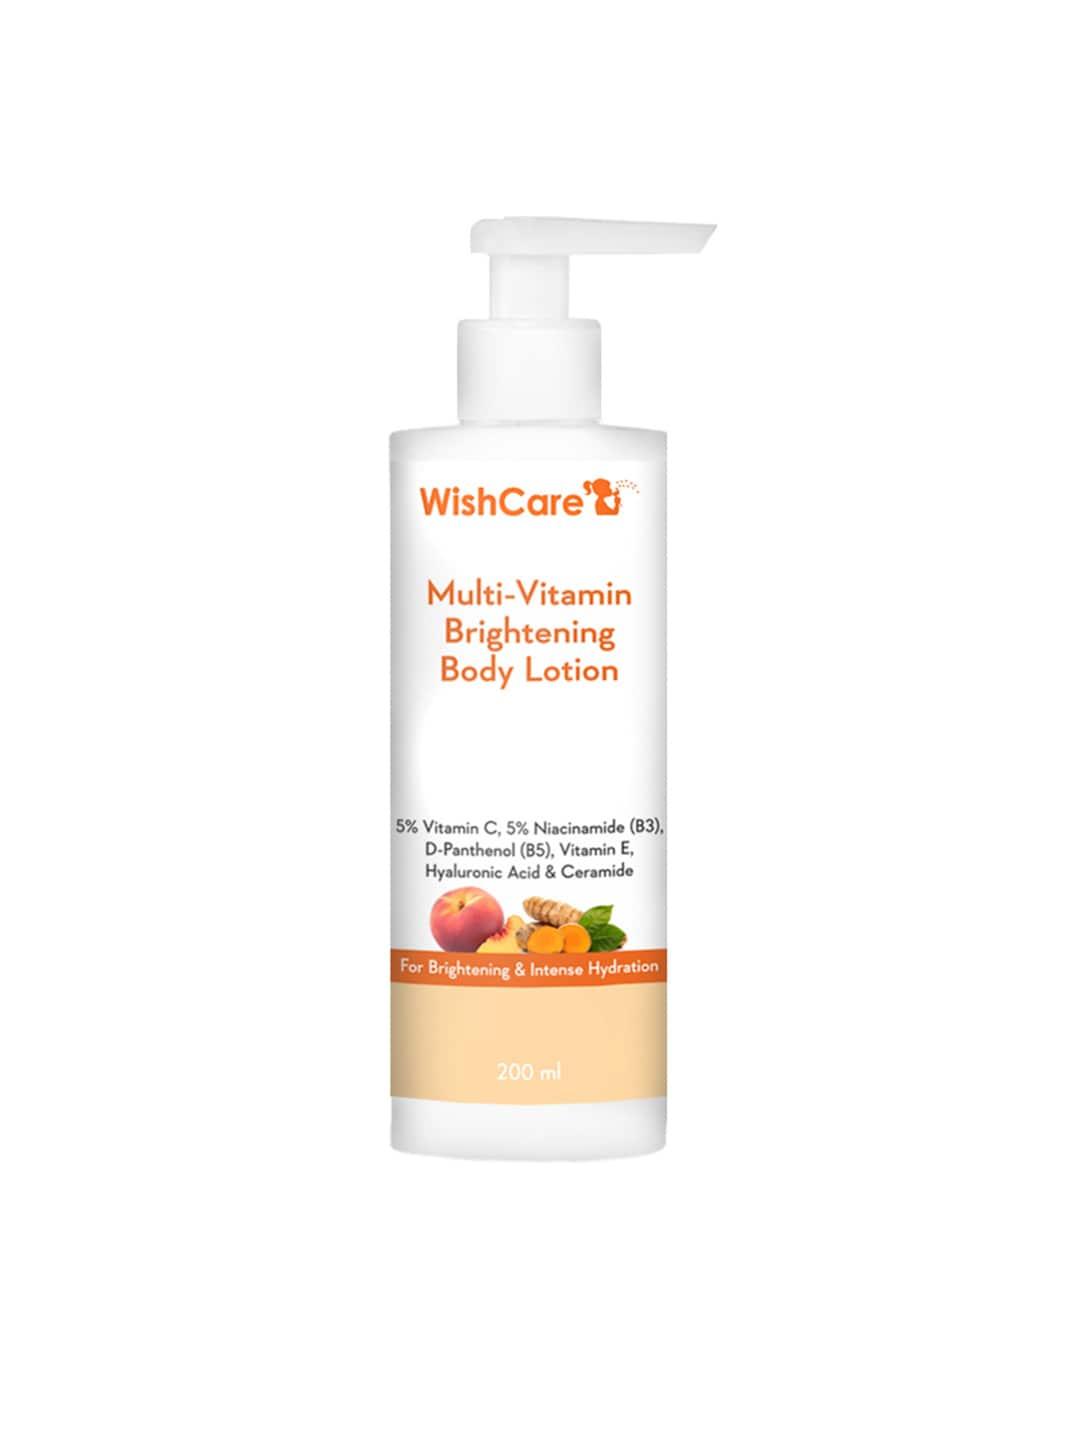 wishcare multi-vitamin brightening body lotion with 5% vitamin c & 5% niacinamide - 200ml